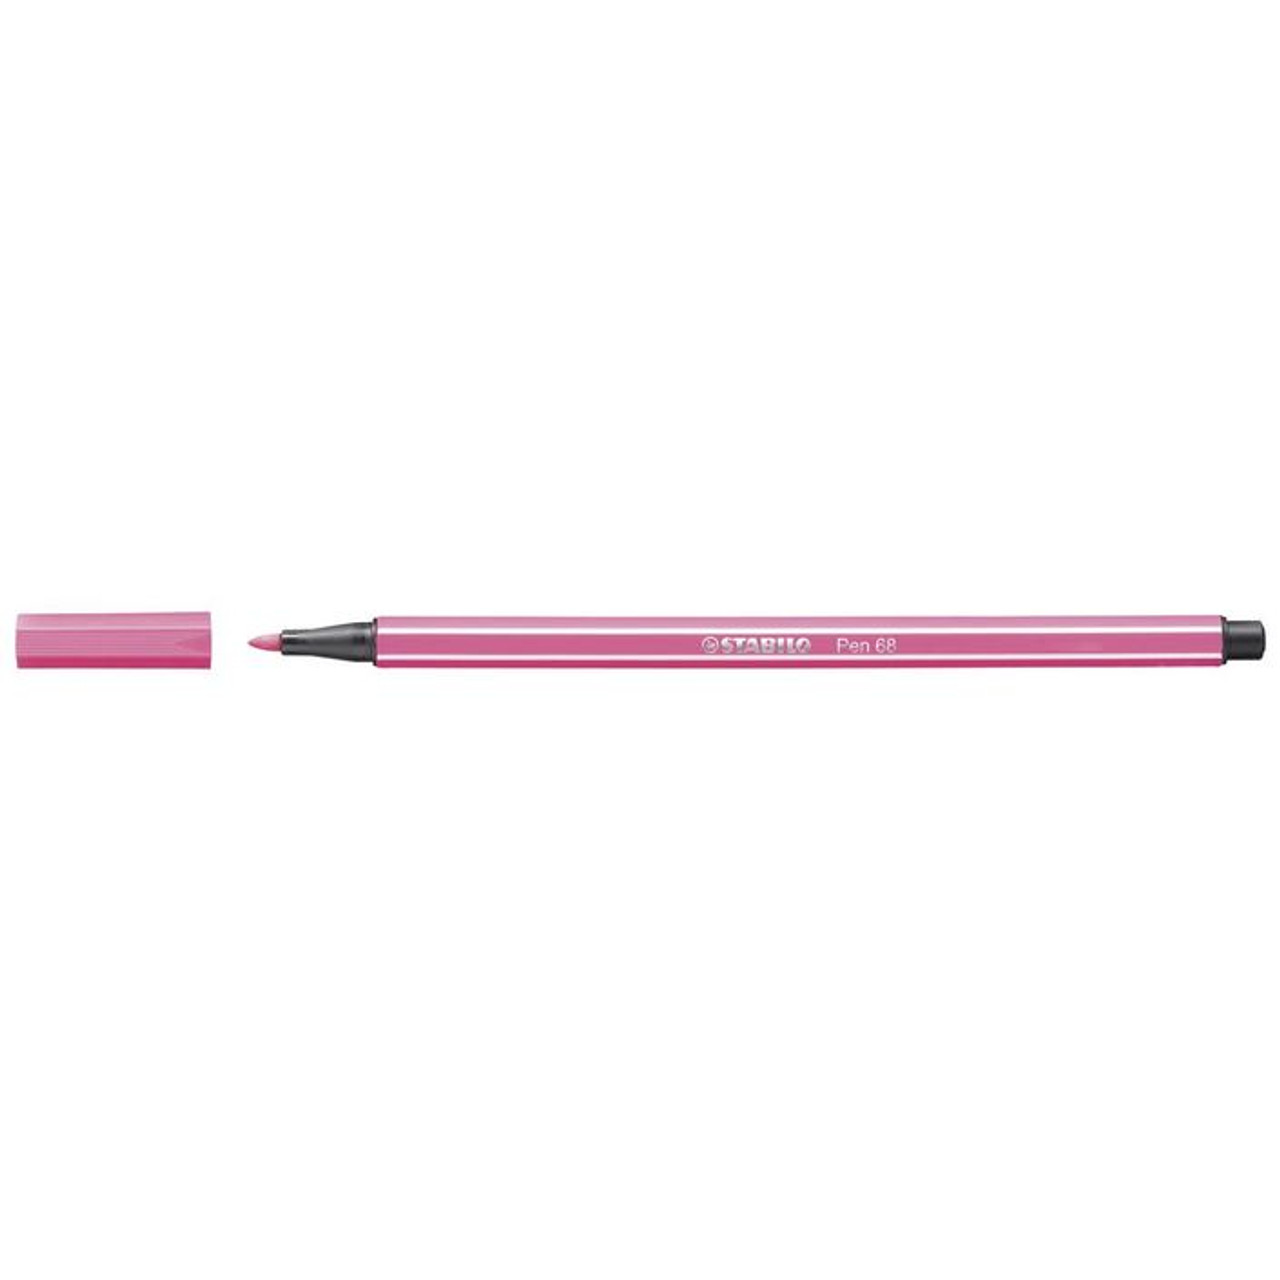 Premium felt-tip pen STABILO Pen 68 - pack of 18 colors